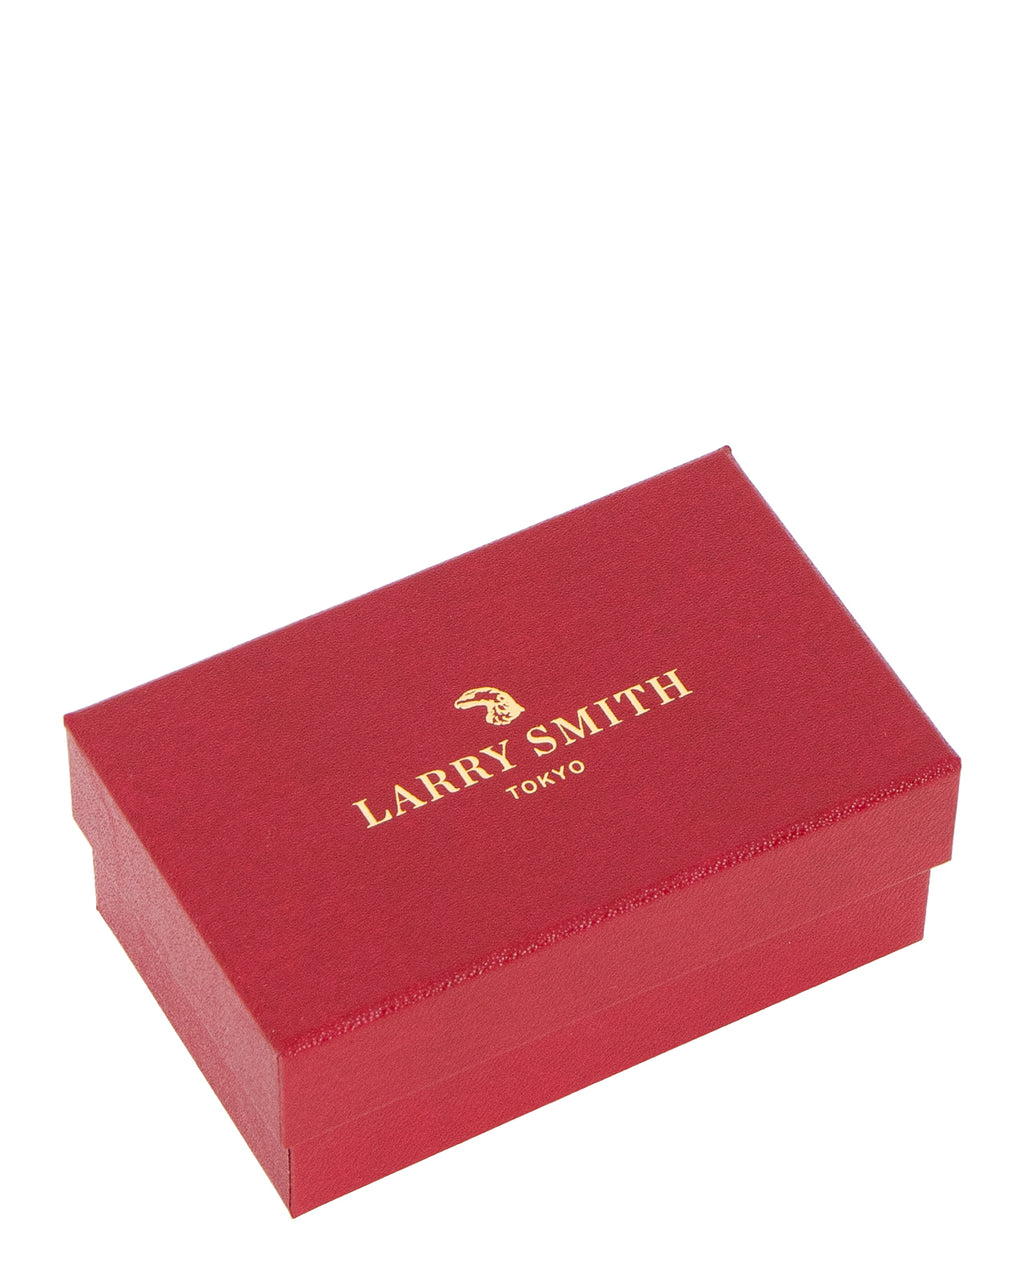 Larry Smith Edged Eagle Head Bracelet